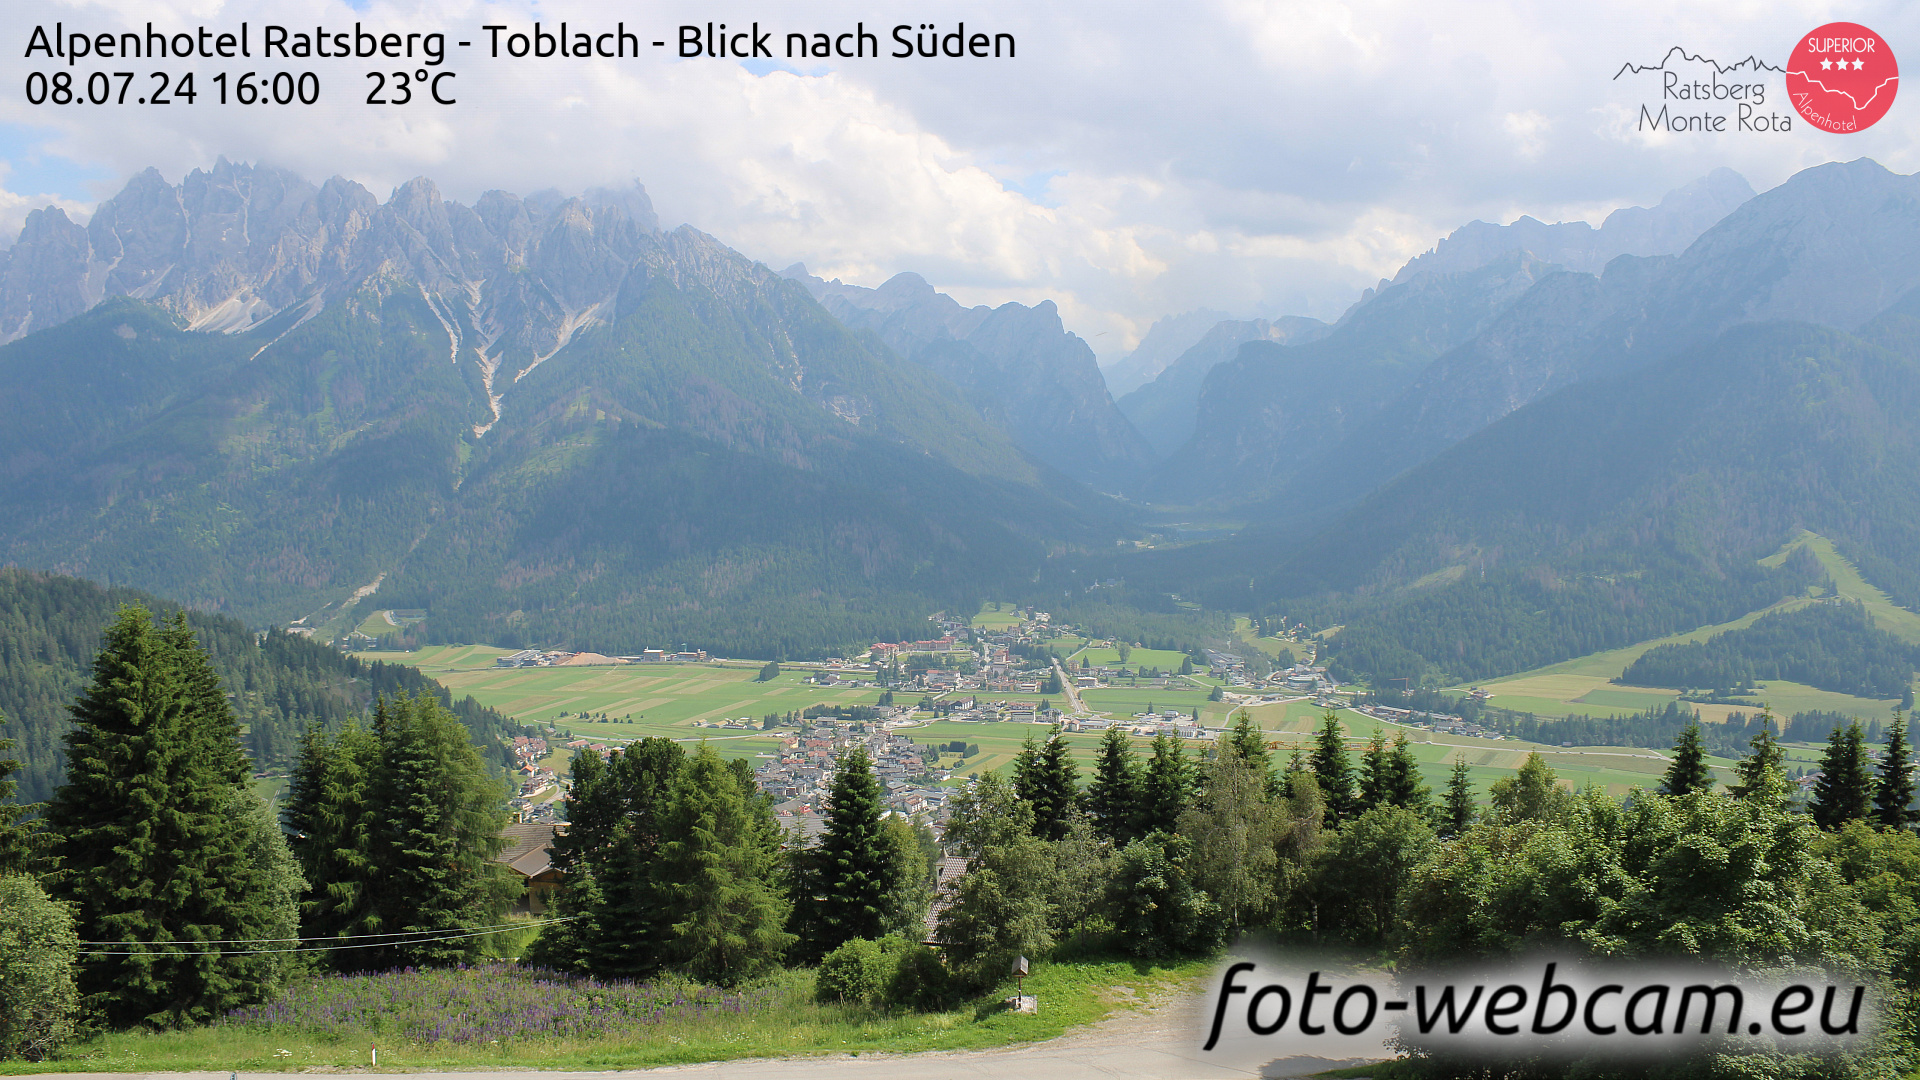 Toblach (Dolomites) Thu. 16:03